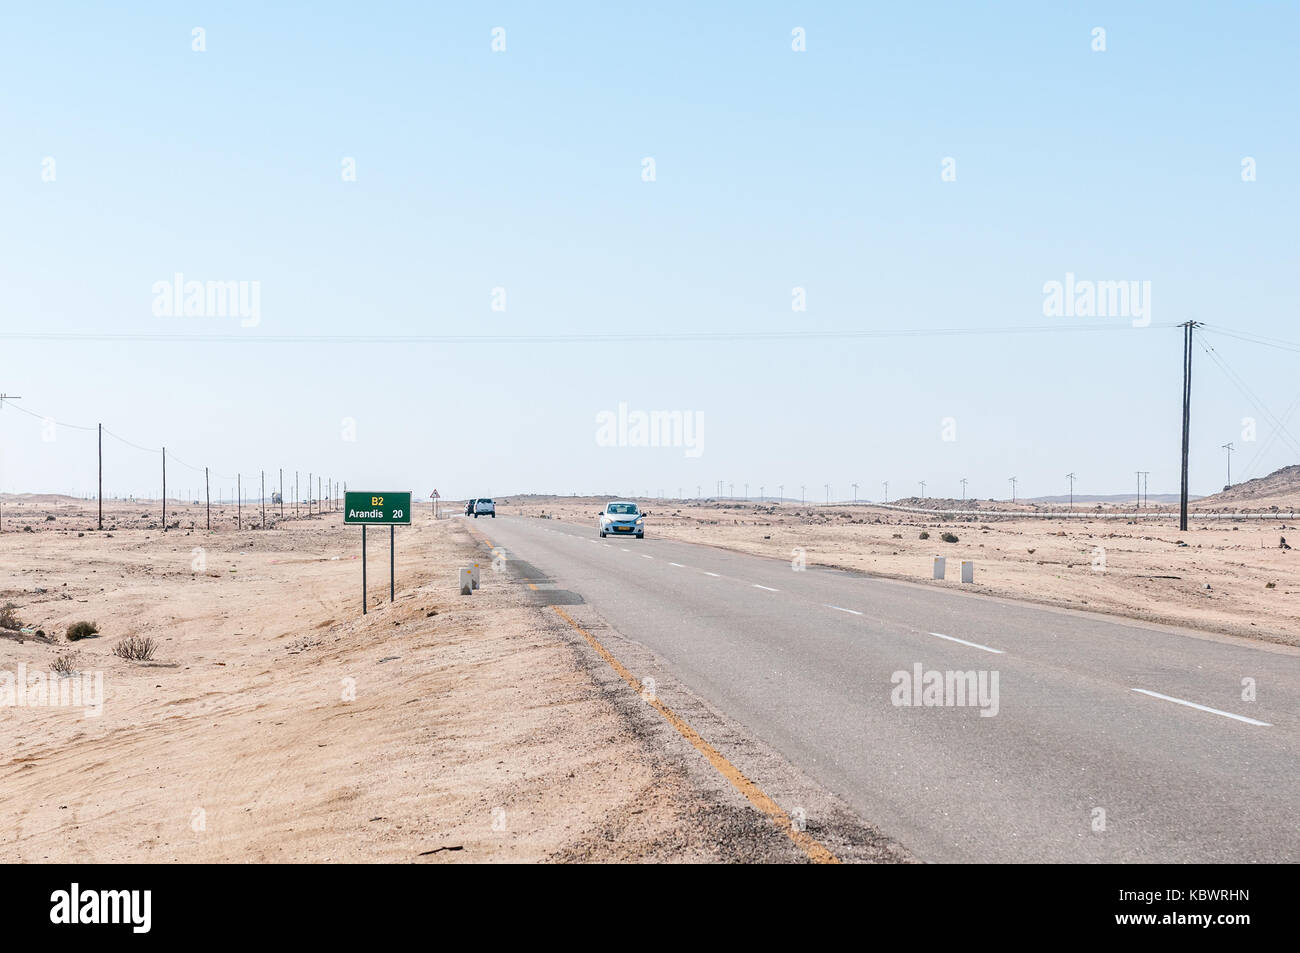 SWAKOPMUND, NAMIBIA - JULY 3, 2017: The B2-road between Swakopmund and Arandis in the Namib Desert of Namibia Stock Photo